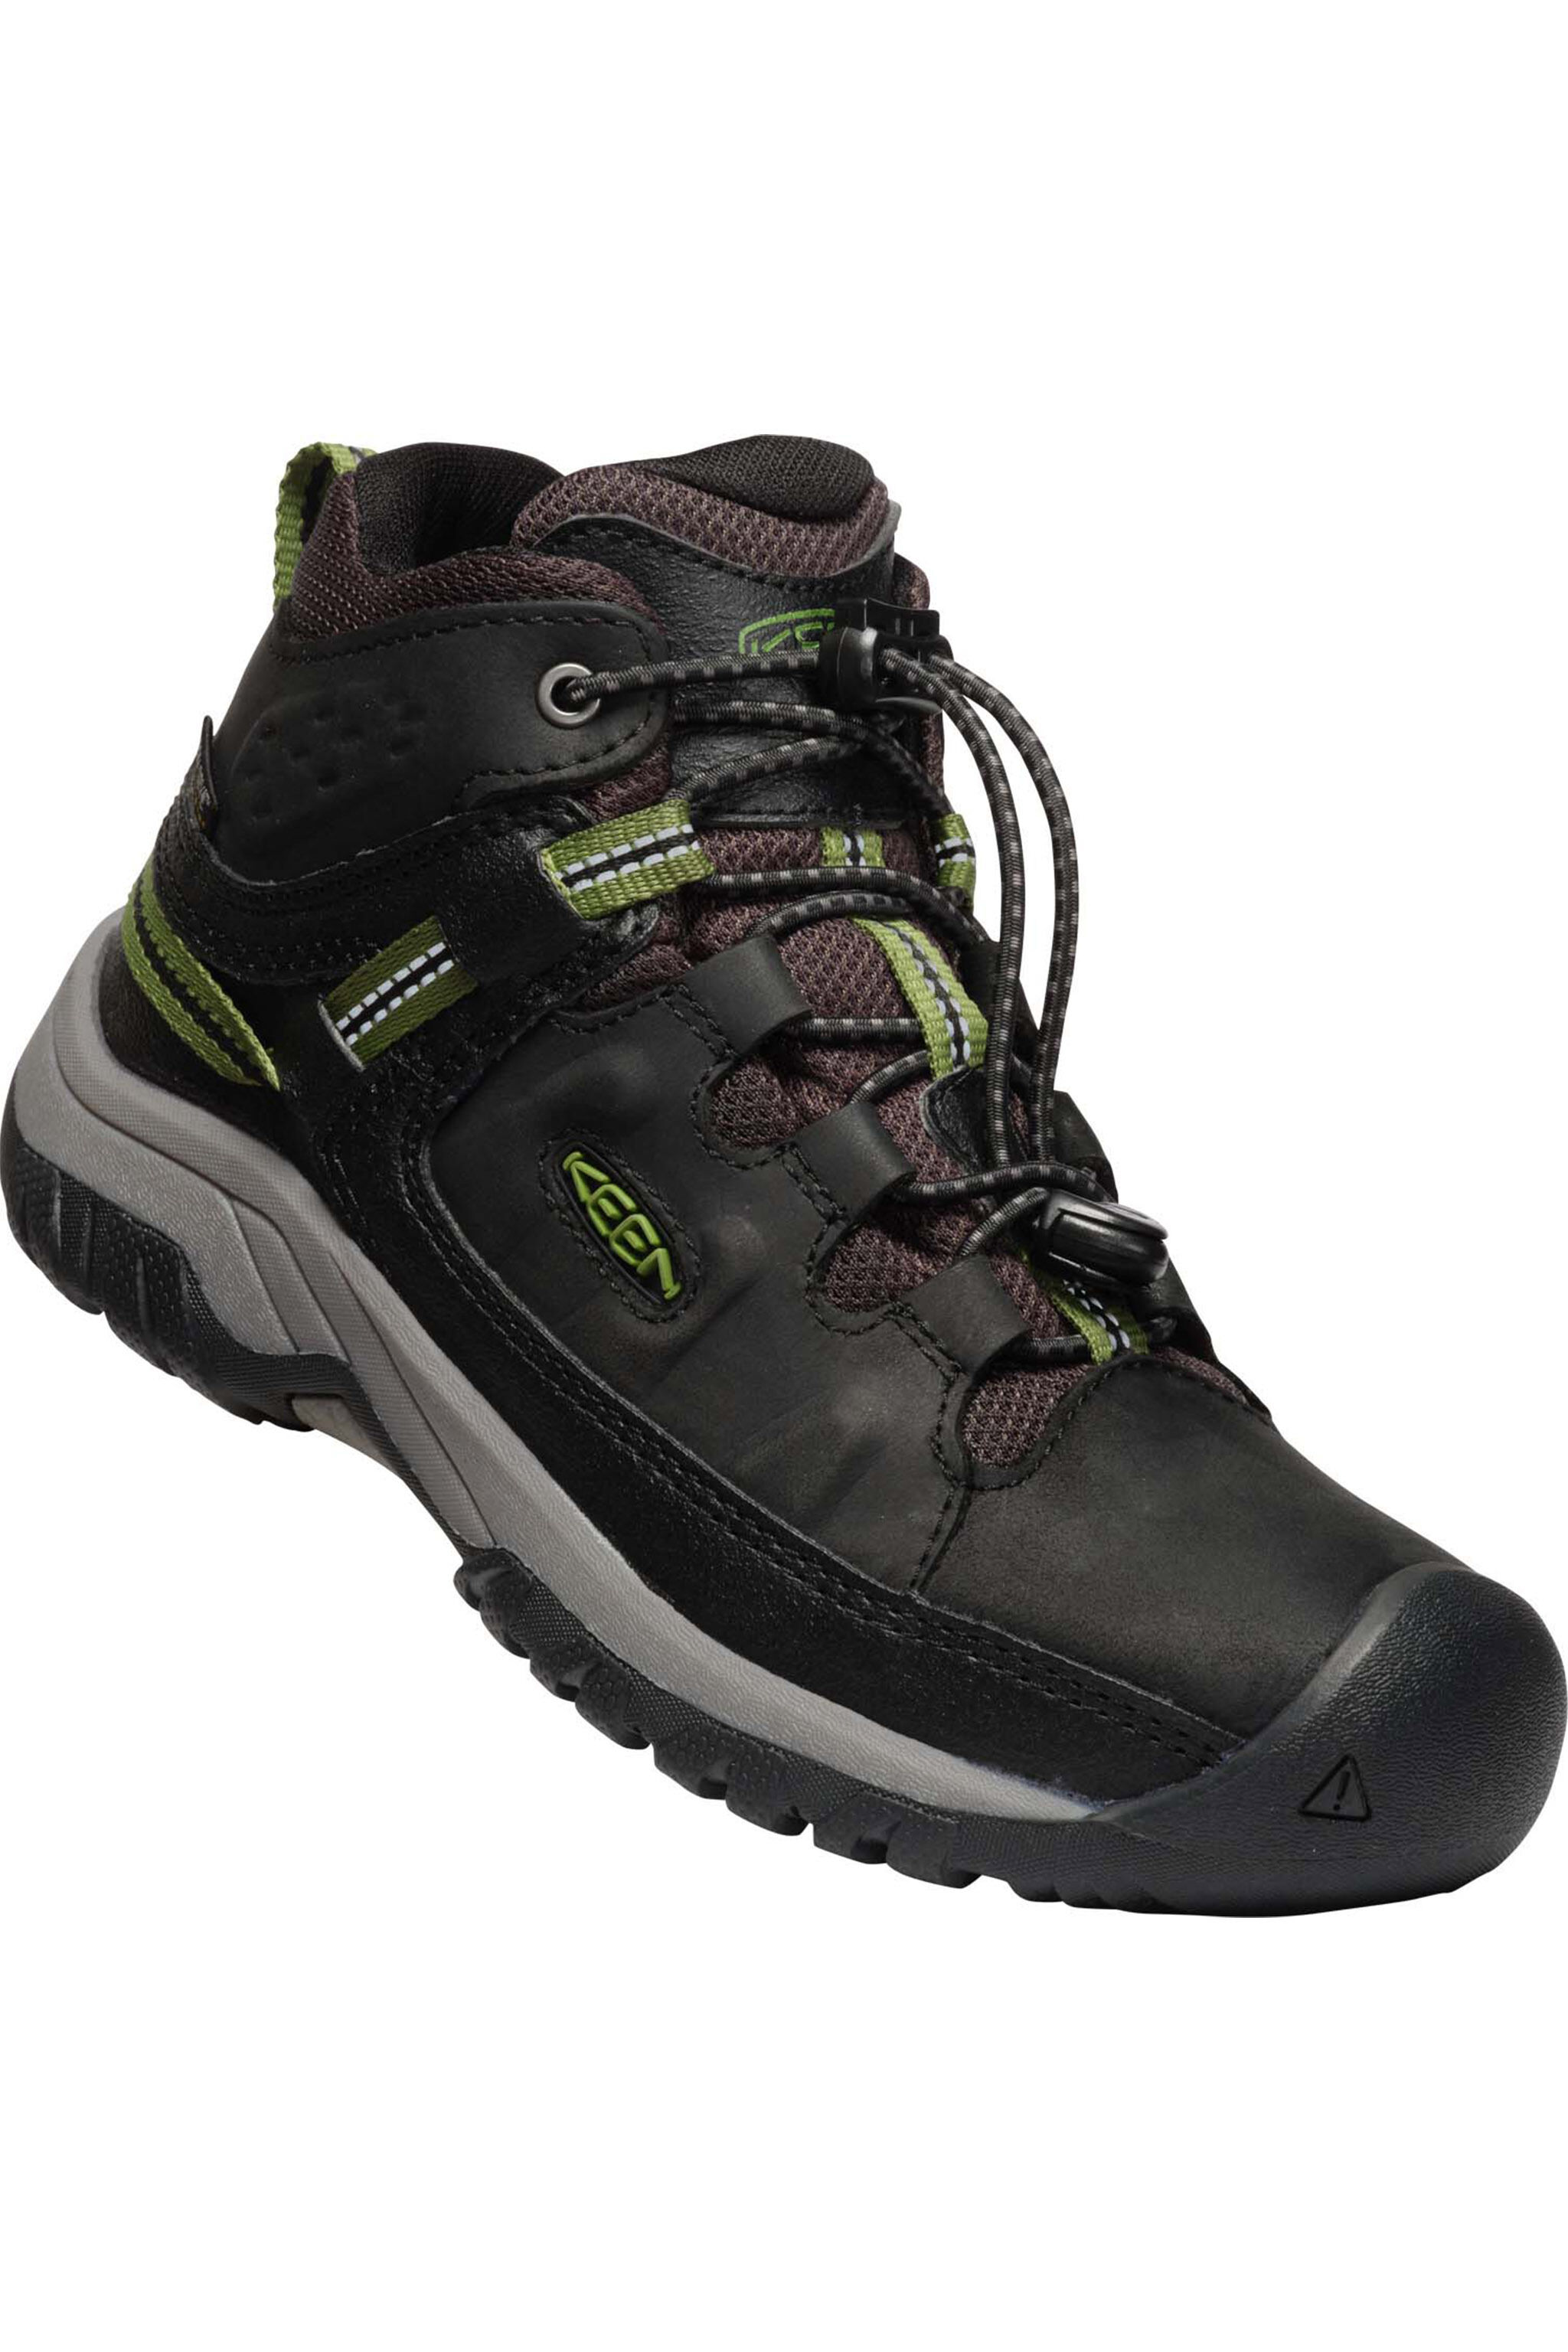 Kids Hiking Boots \u0026 Shoes - Buy Online 